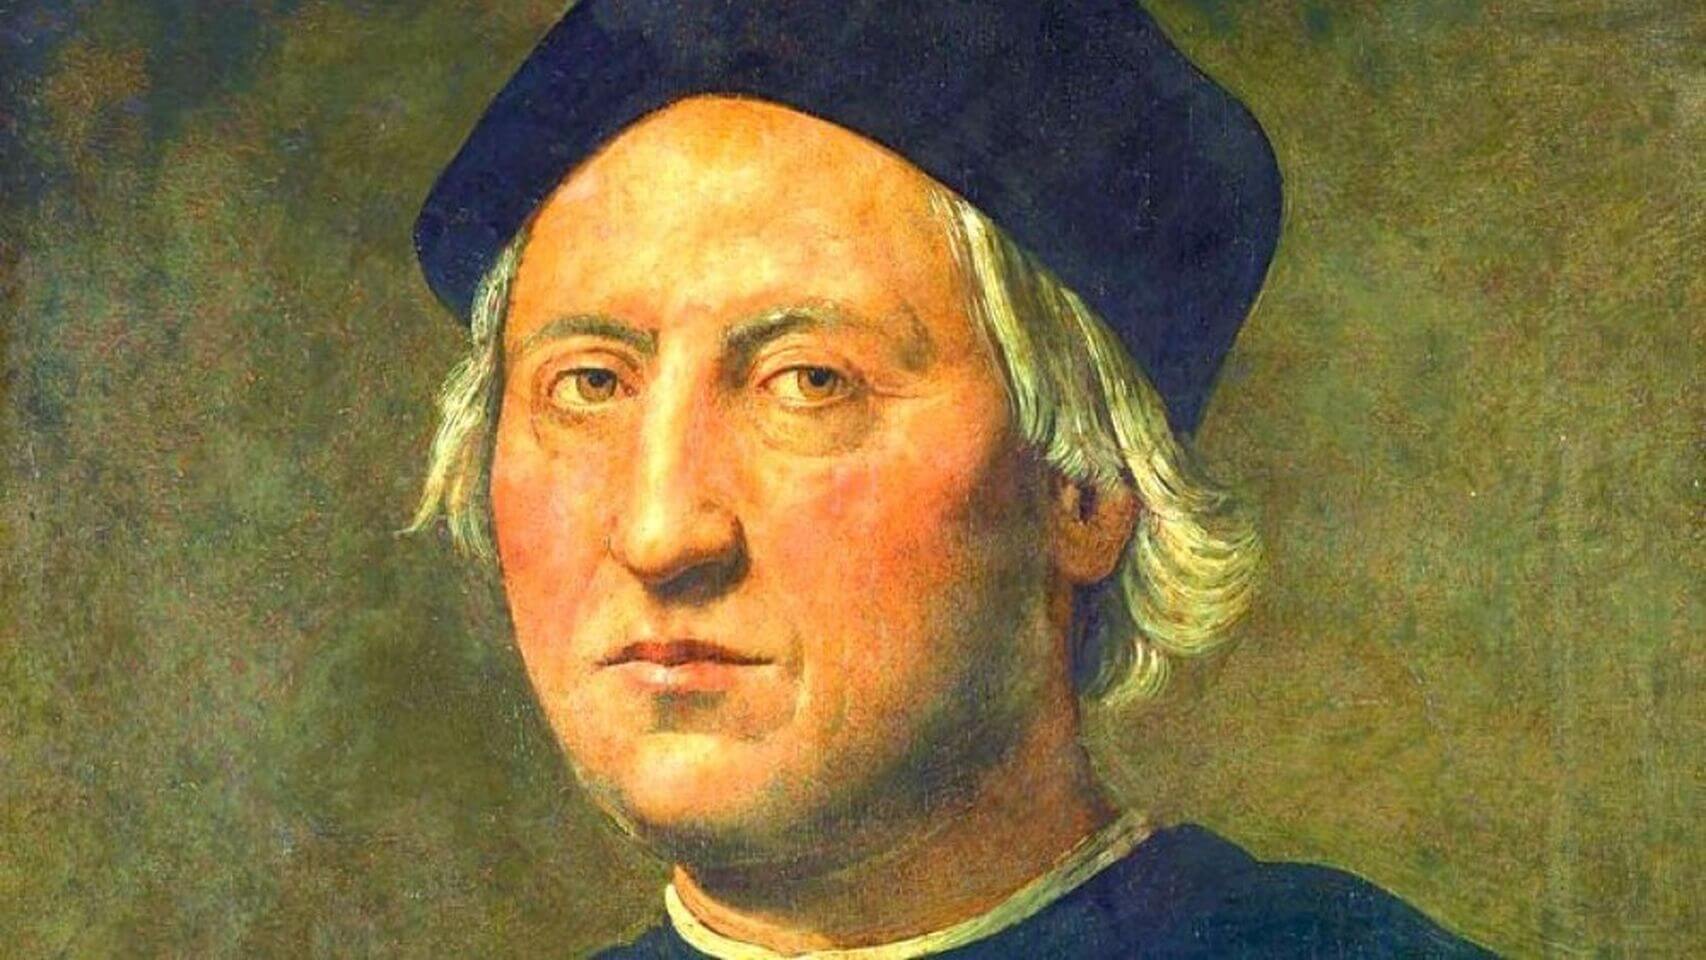 Datos interesantes y divertidos sobre Cristóbal Colón